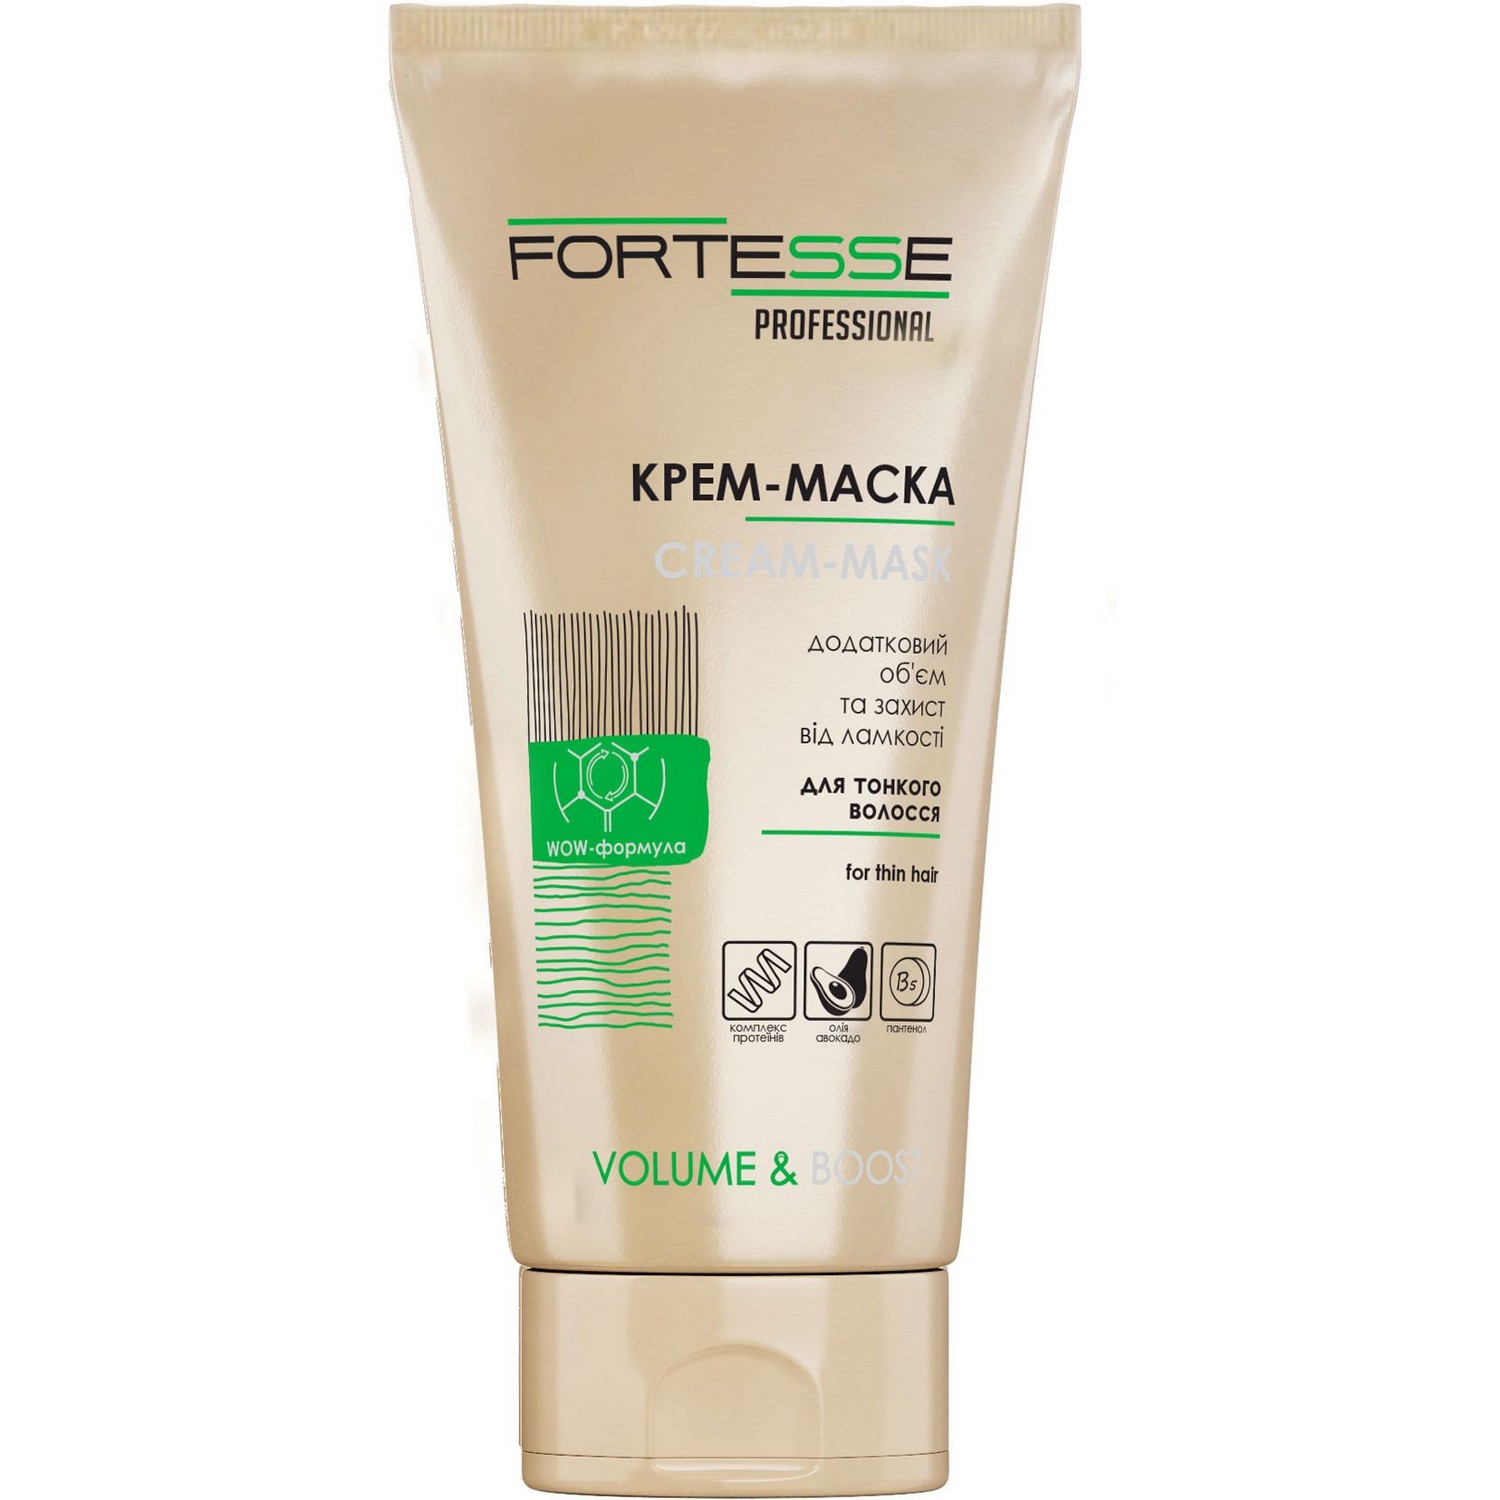 Маска-крем Fortesse Professional Volume & Boost Об'єм, для тонкого волосся, 200 мл - фото 1